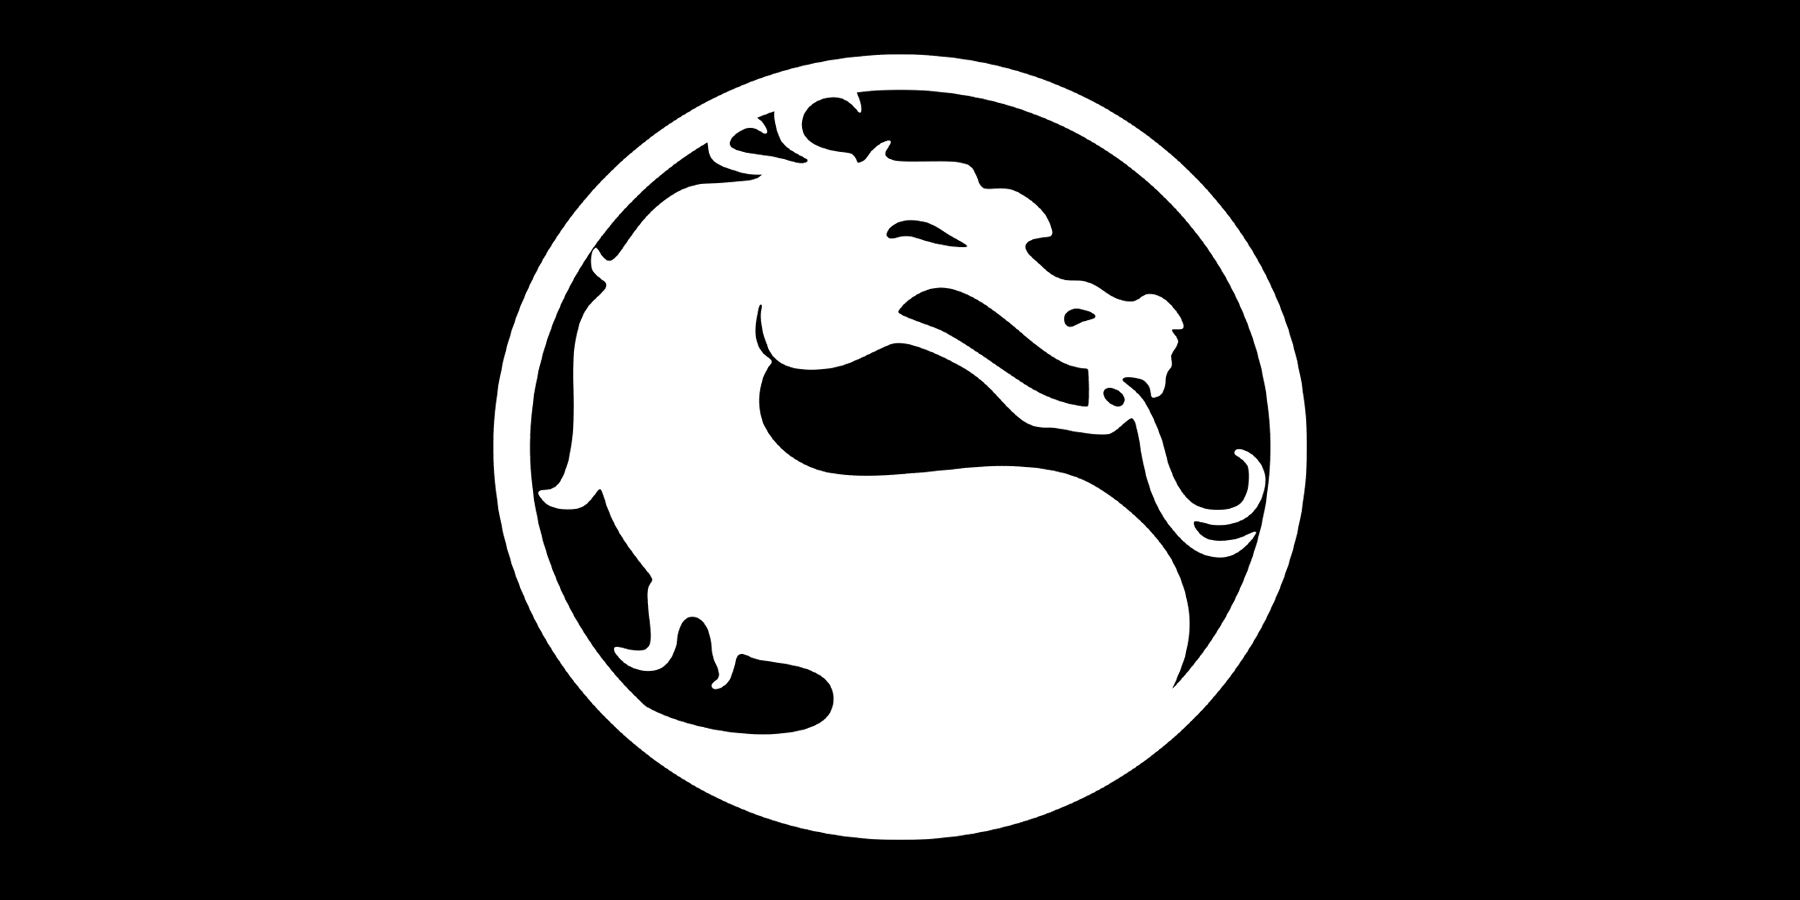 mortal kombat white logo on black background